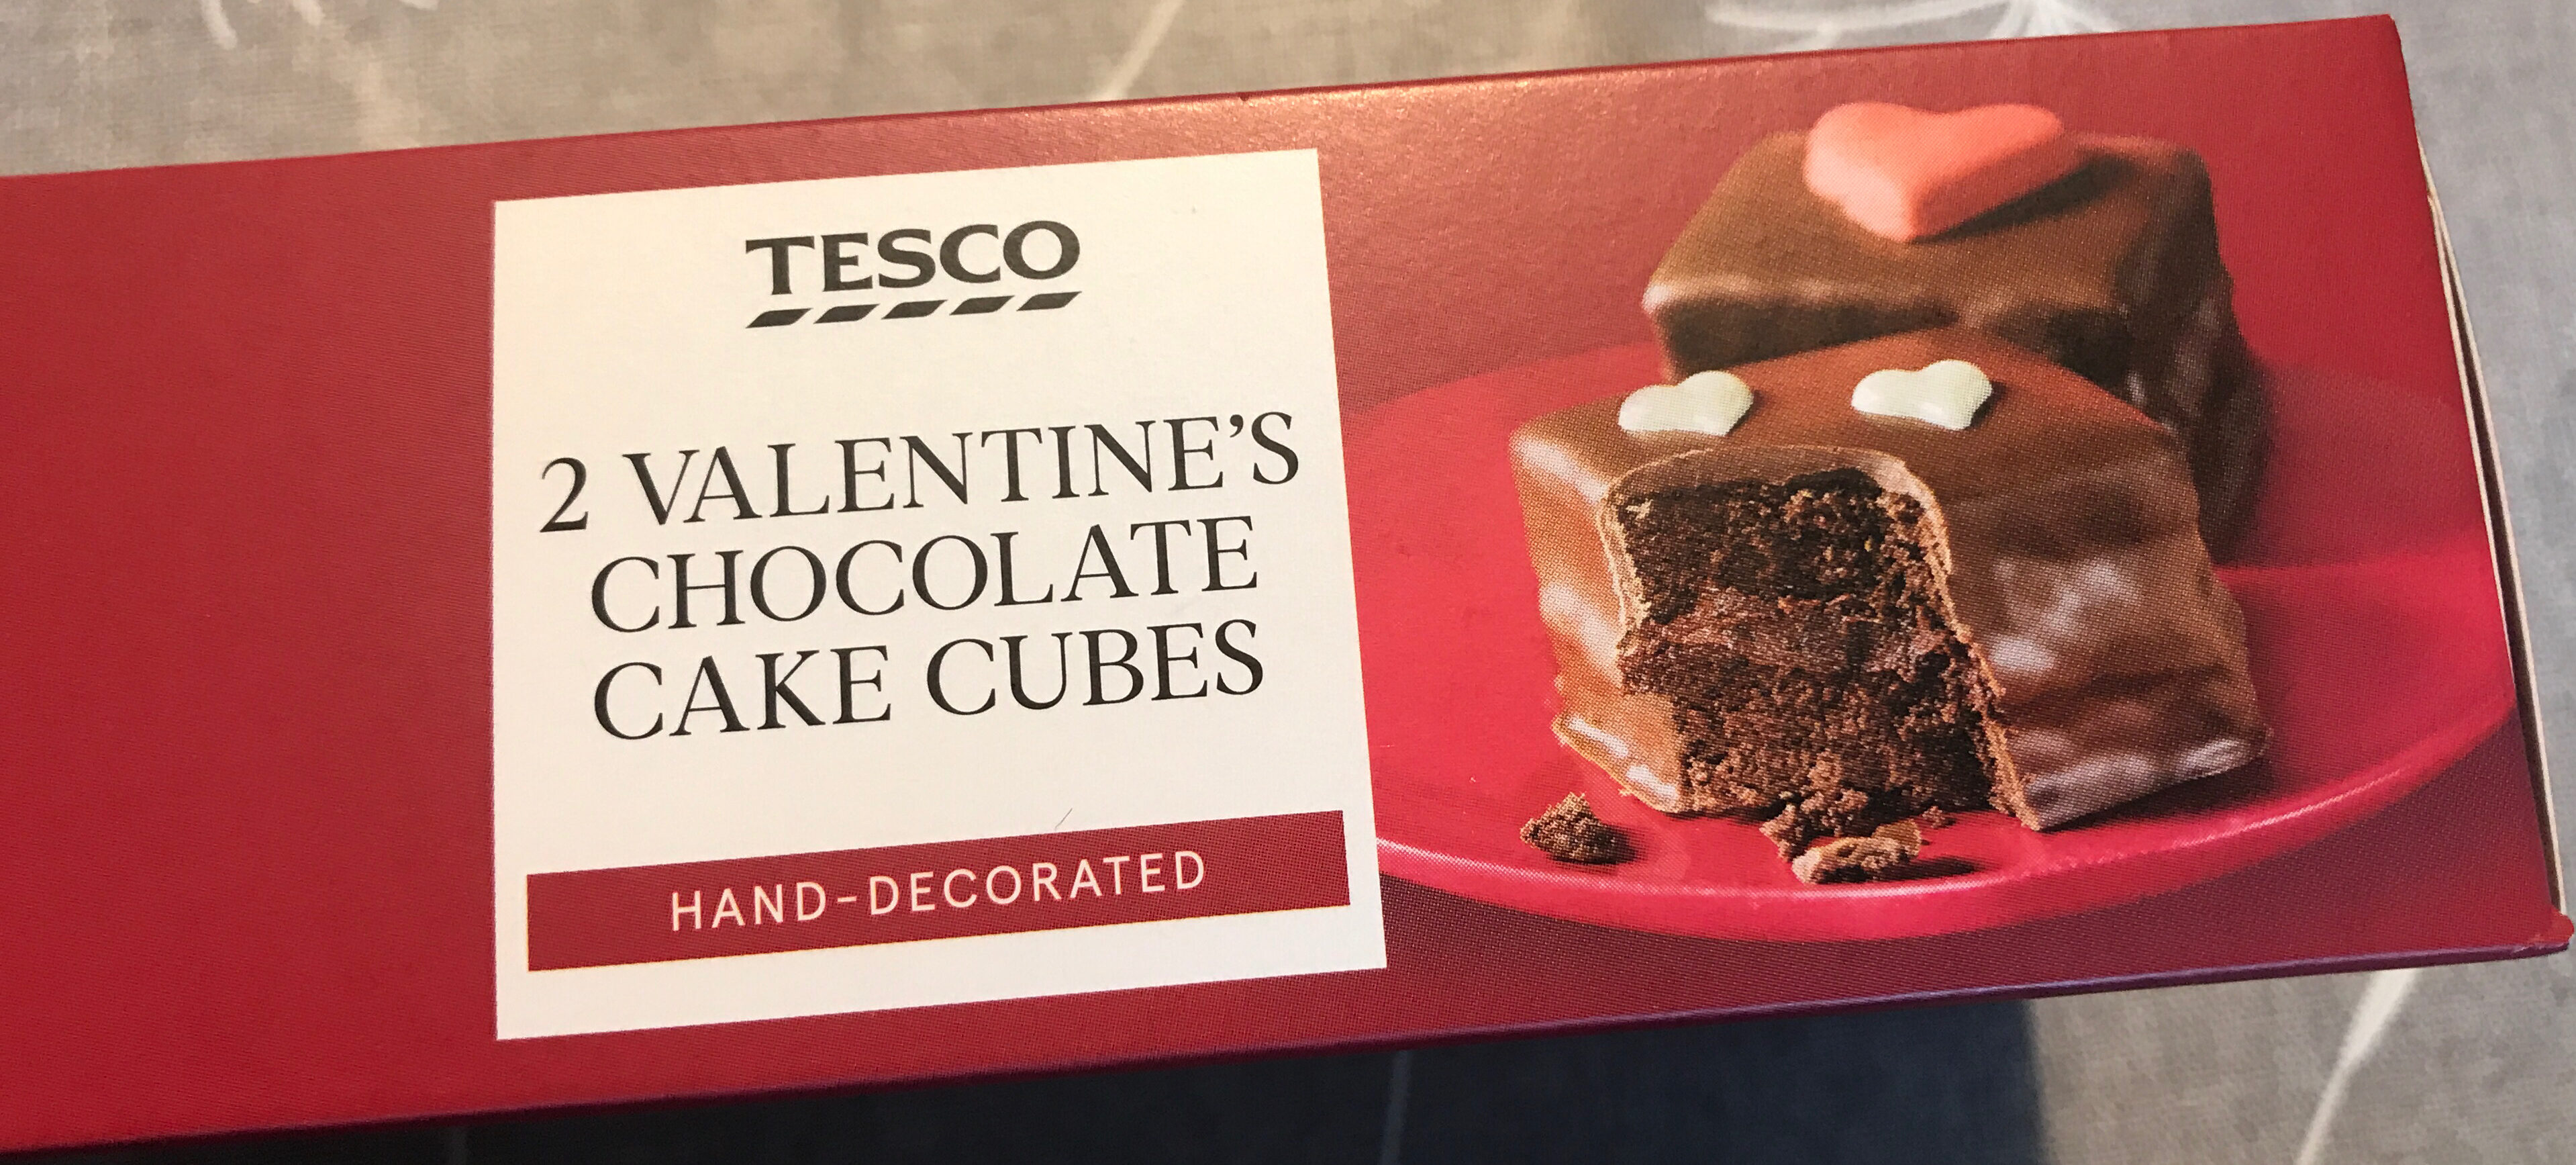 Valentine’s chocolate cake cube - Produkt - en